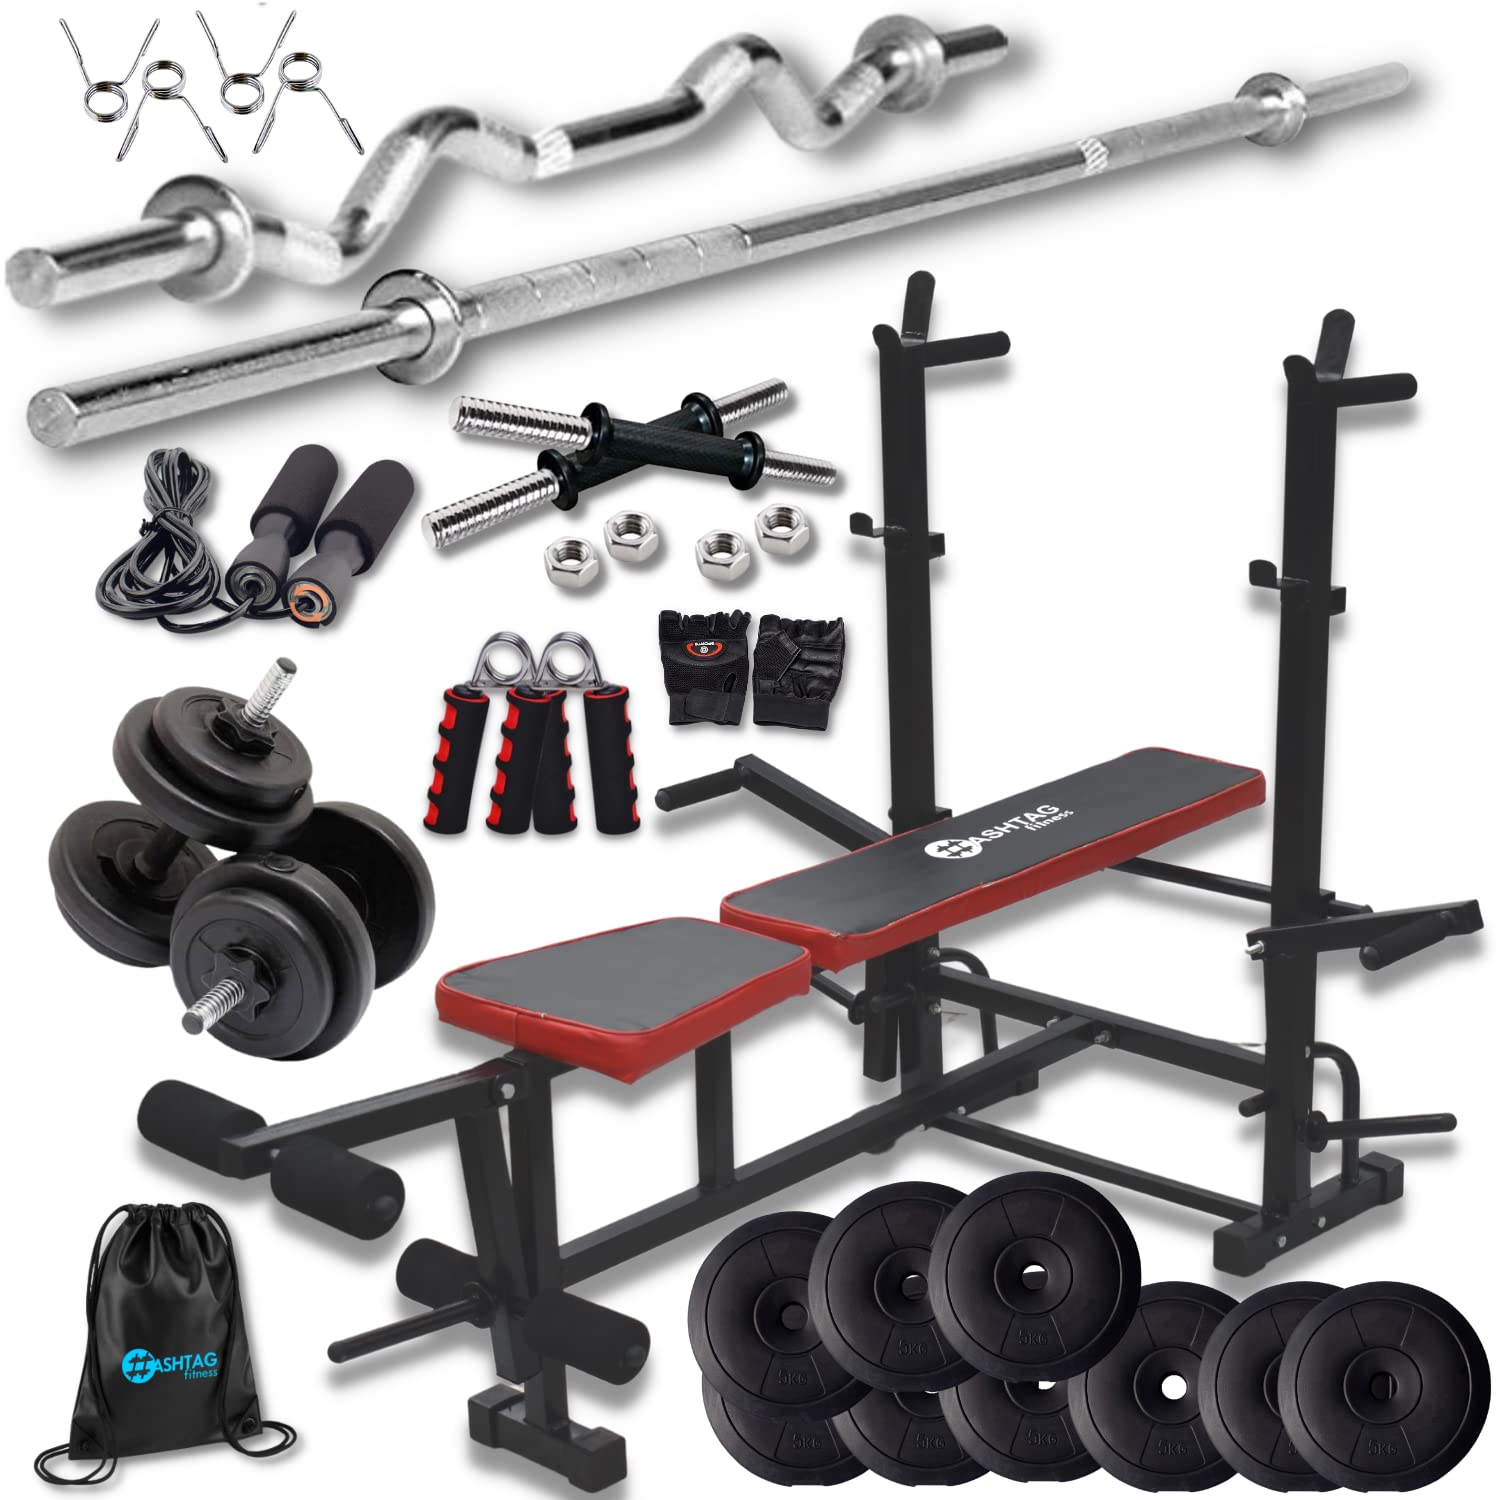 Statoys Fitness Adjustable Barbell Set - 20kg Home Gym Equipment